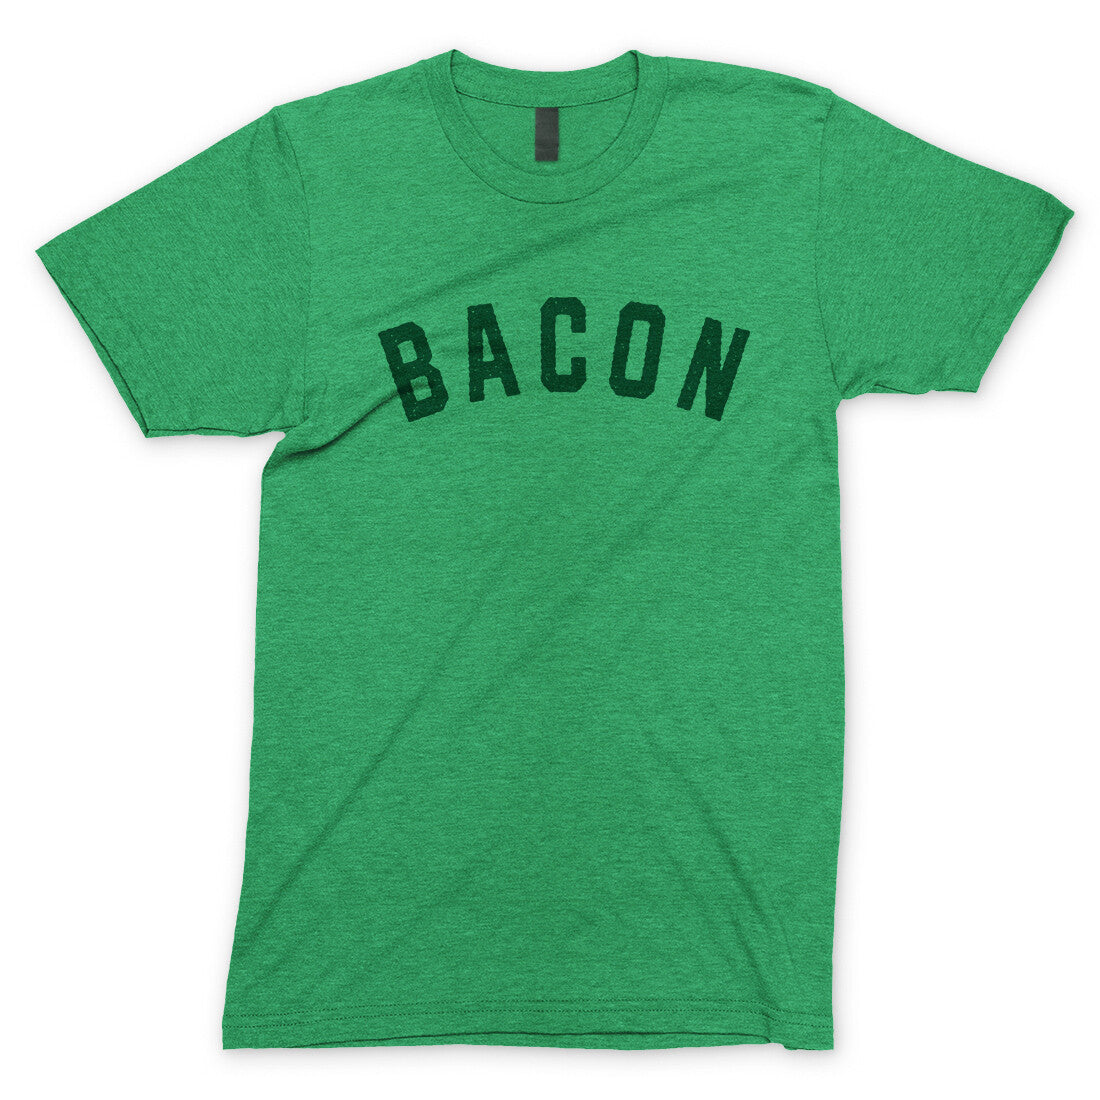 Bacon in Heather Irish Green Color